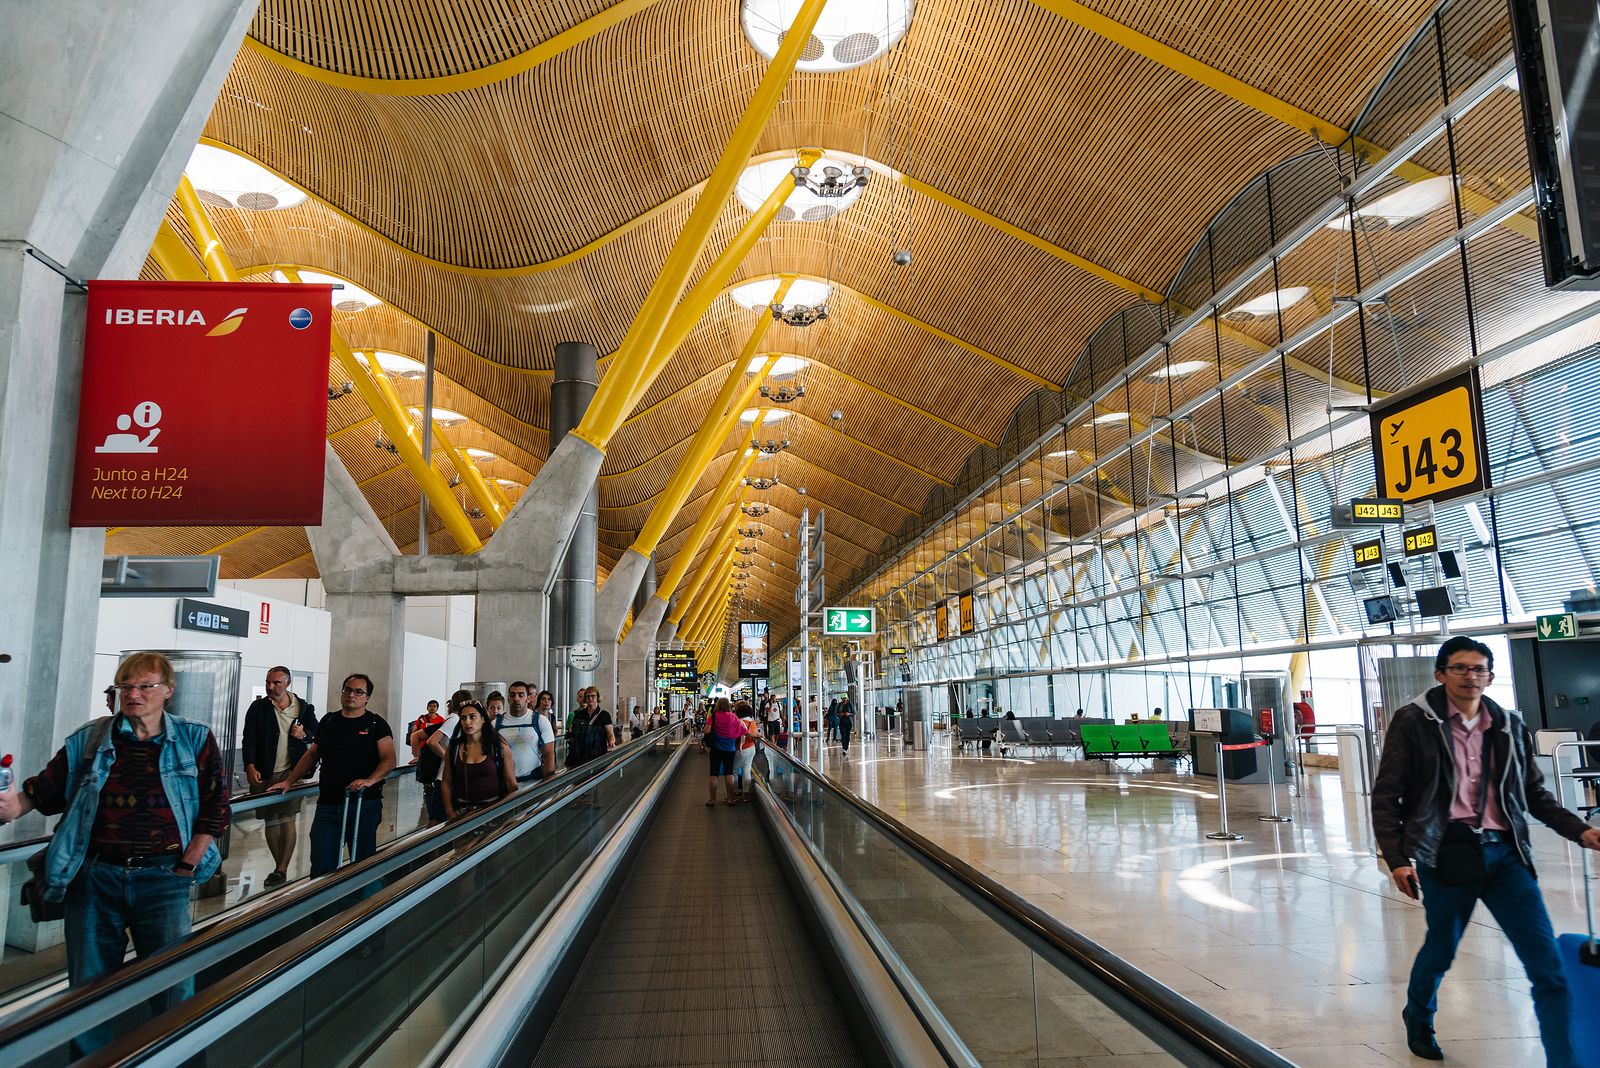 T4 del Aeropuerto Madrid-Barajas